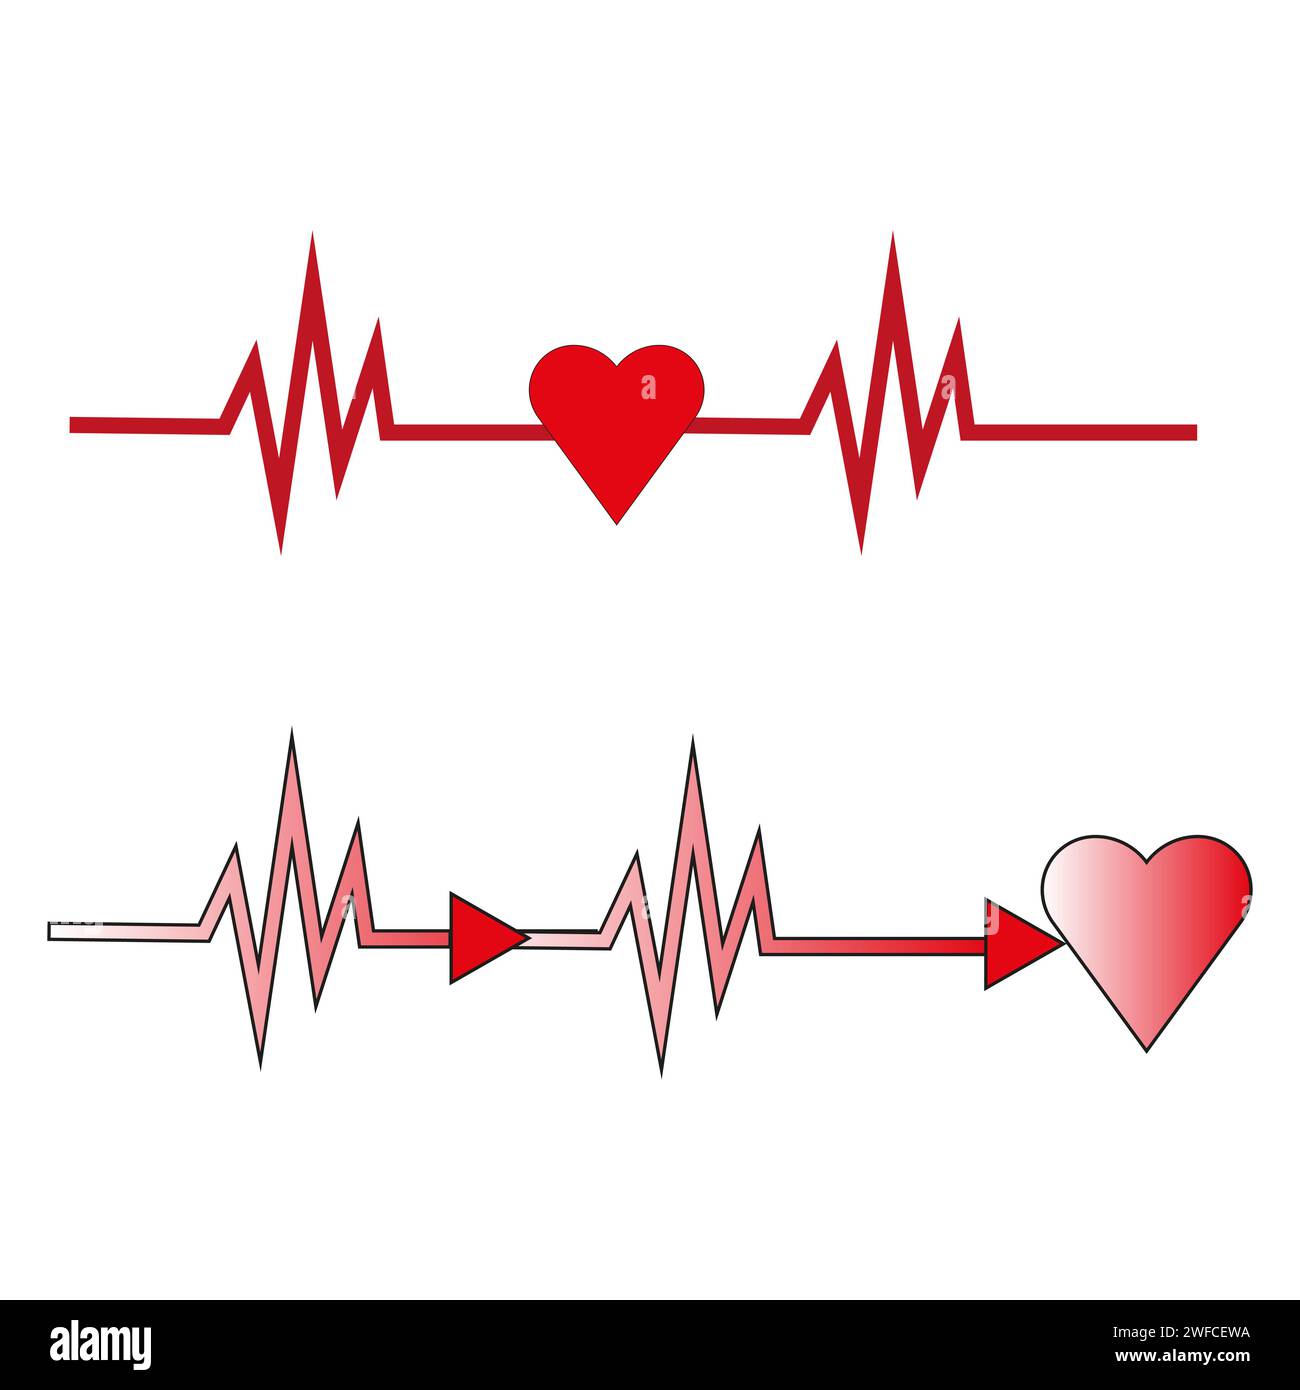 Heart pulse. Medicine, healthcare concept. Vector illustration. Stock image. EPS 10. Stock Vector